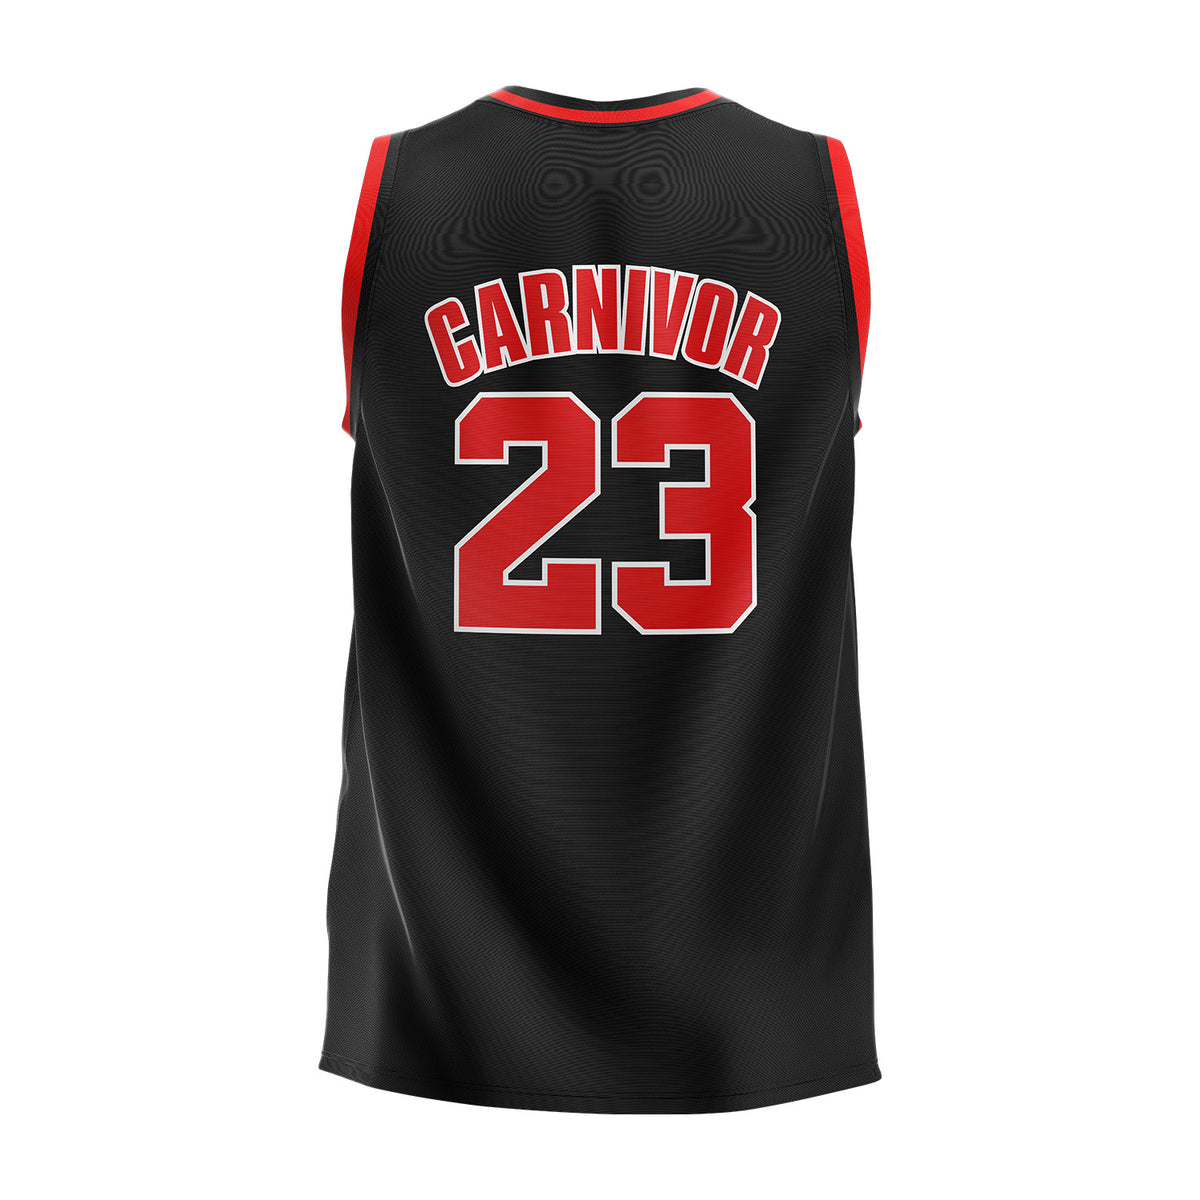 Carnivor Bull Mesh Basketball Jersey - Black